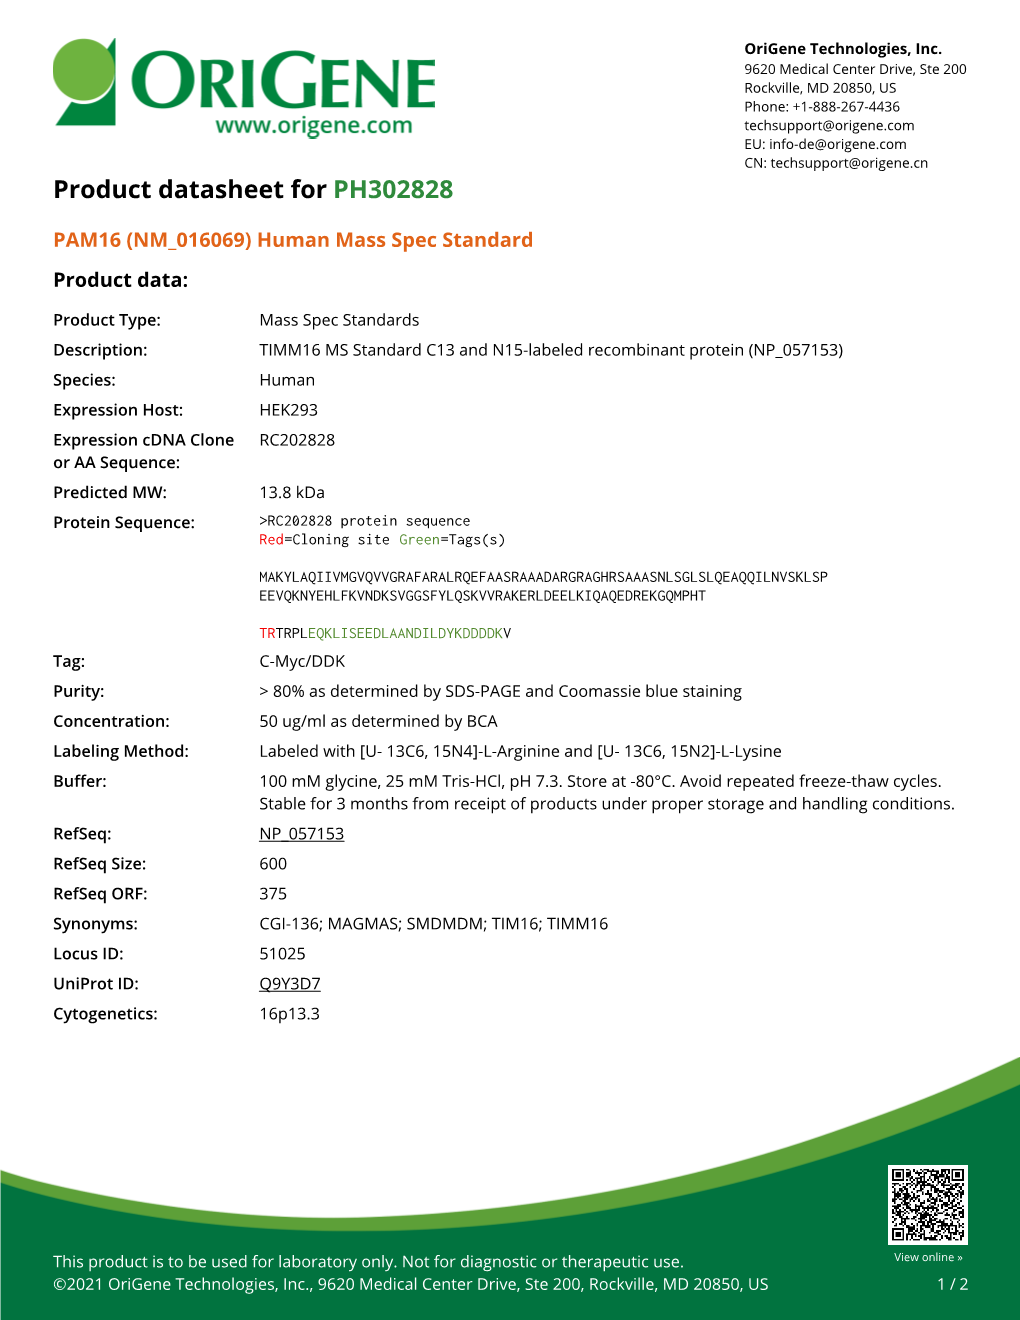 PAM16 (NM 016069) Human Mass Spec Standard Product Data